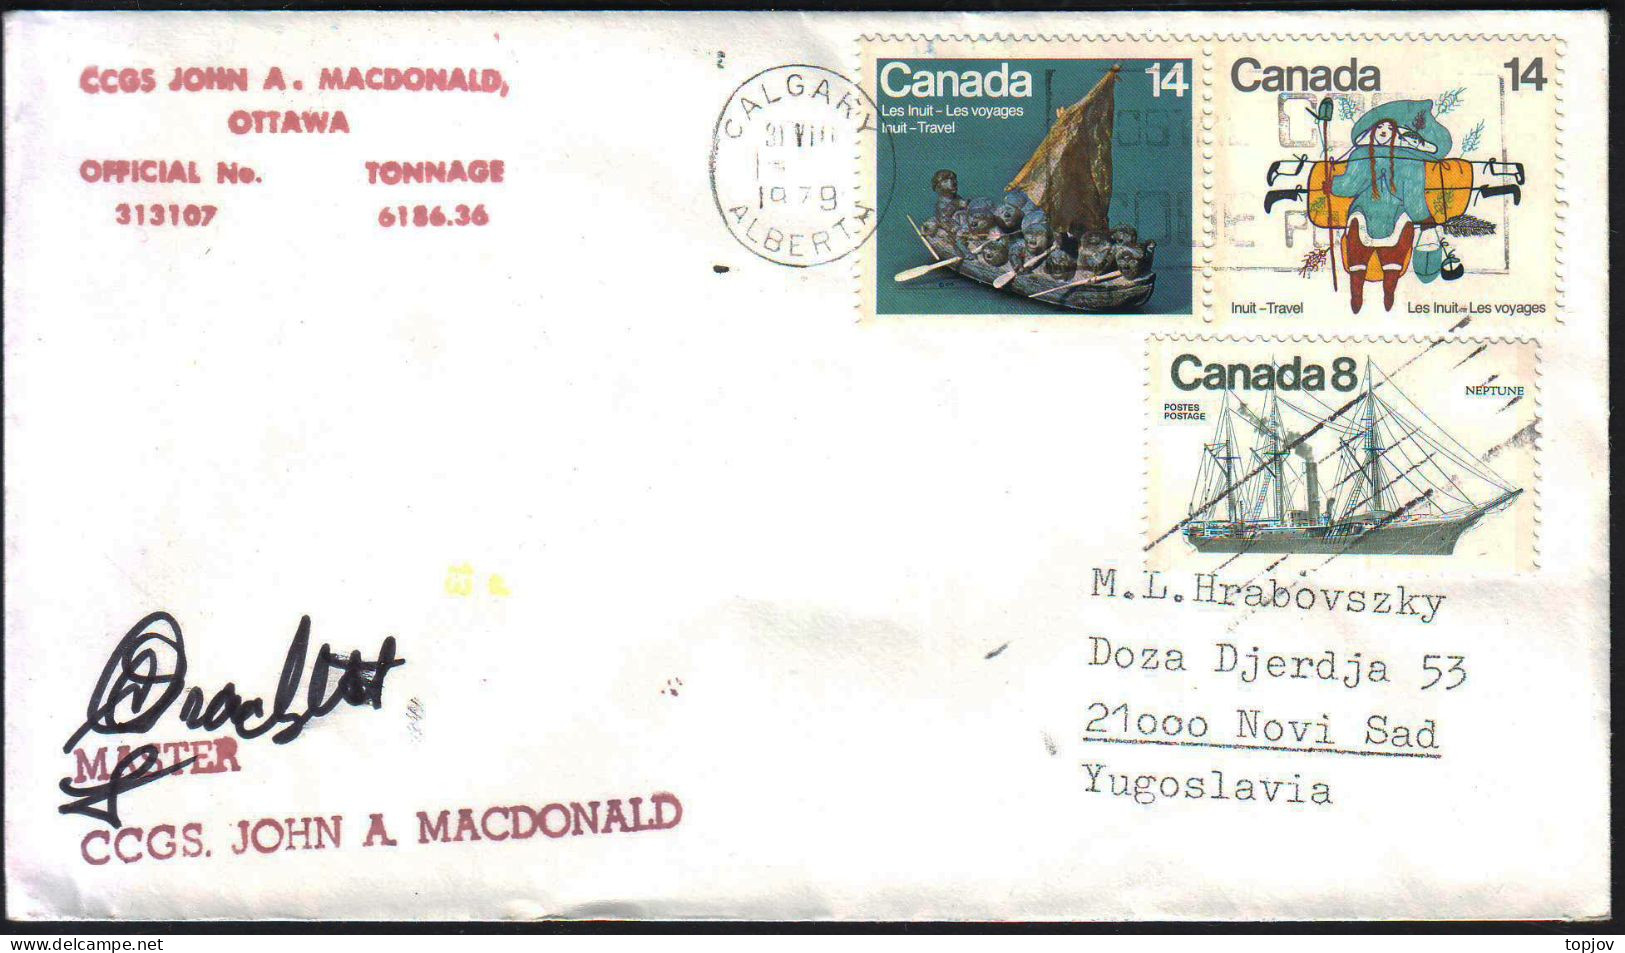 CANADA - CCGS JOHN A. MASDONALD - 1979 - Expediciones árticas